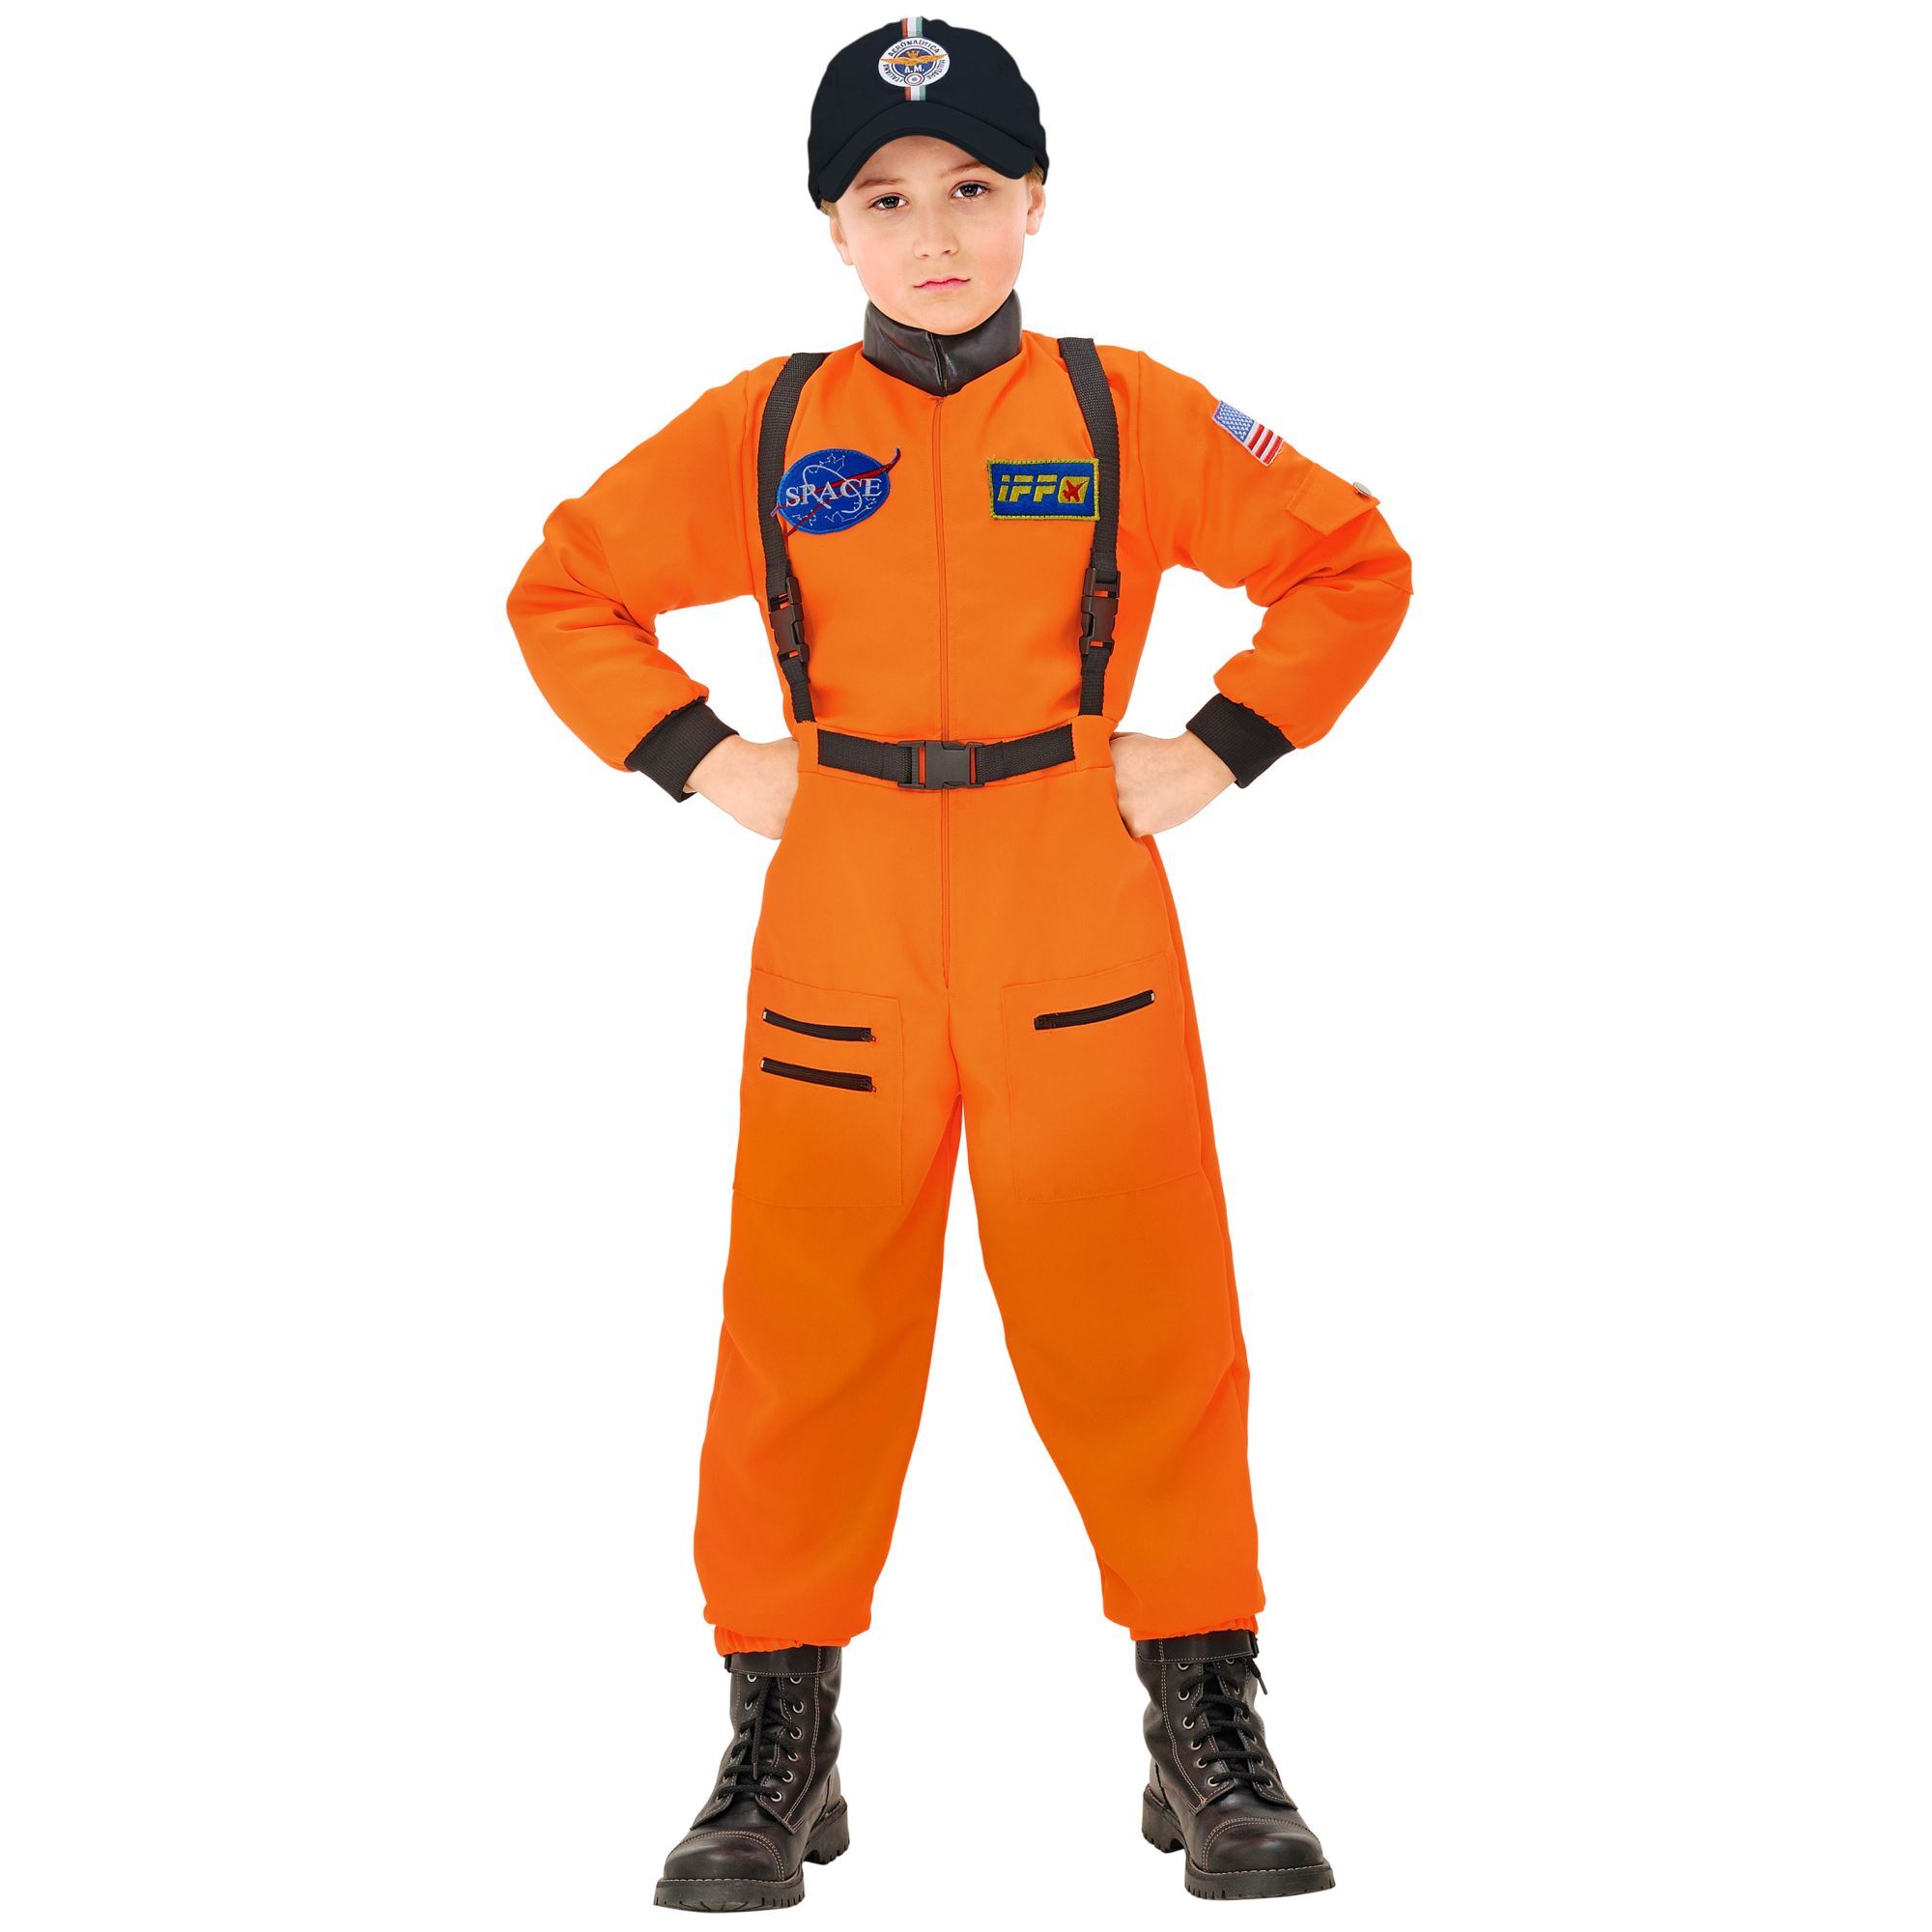 Astronaut kostuum kind oranje